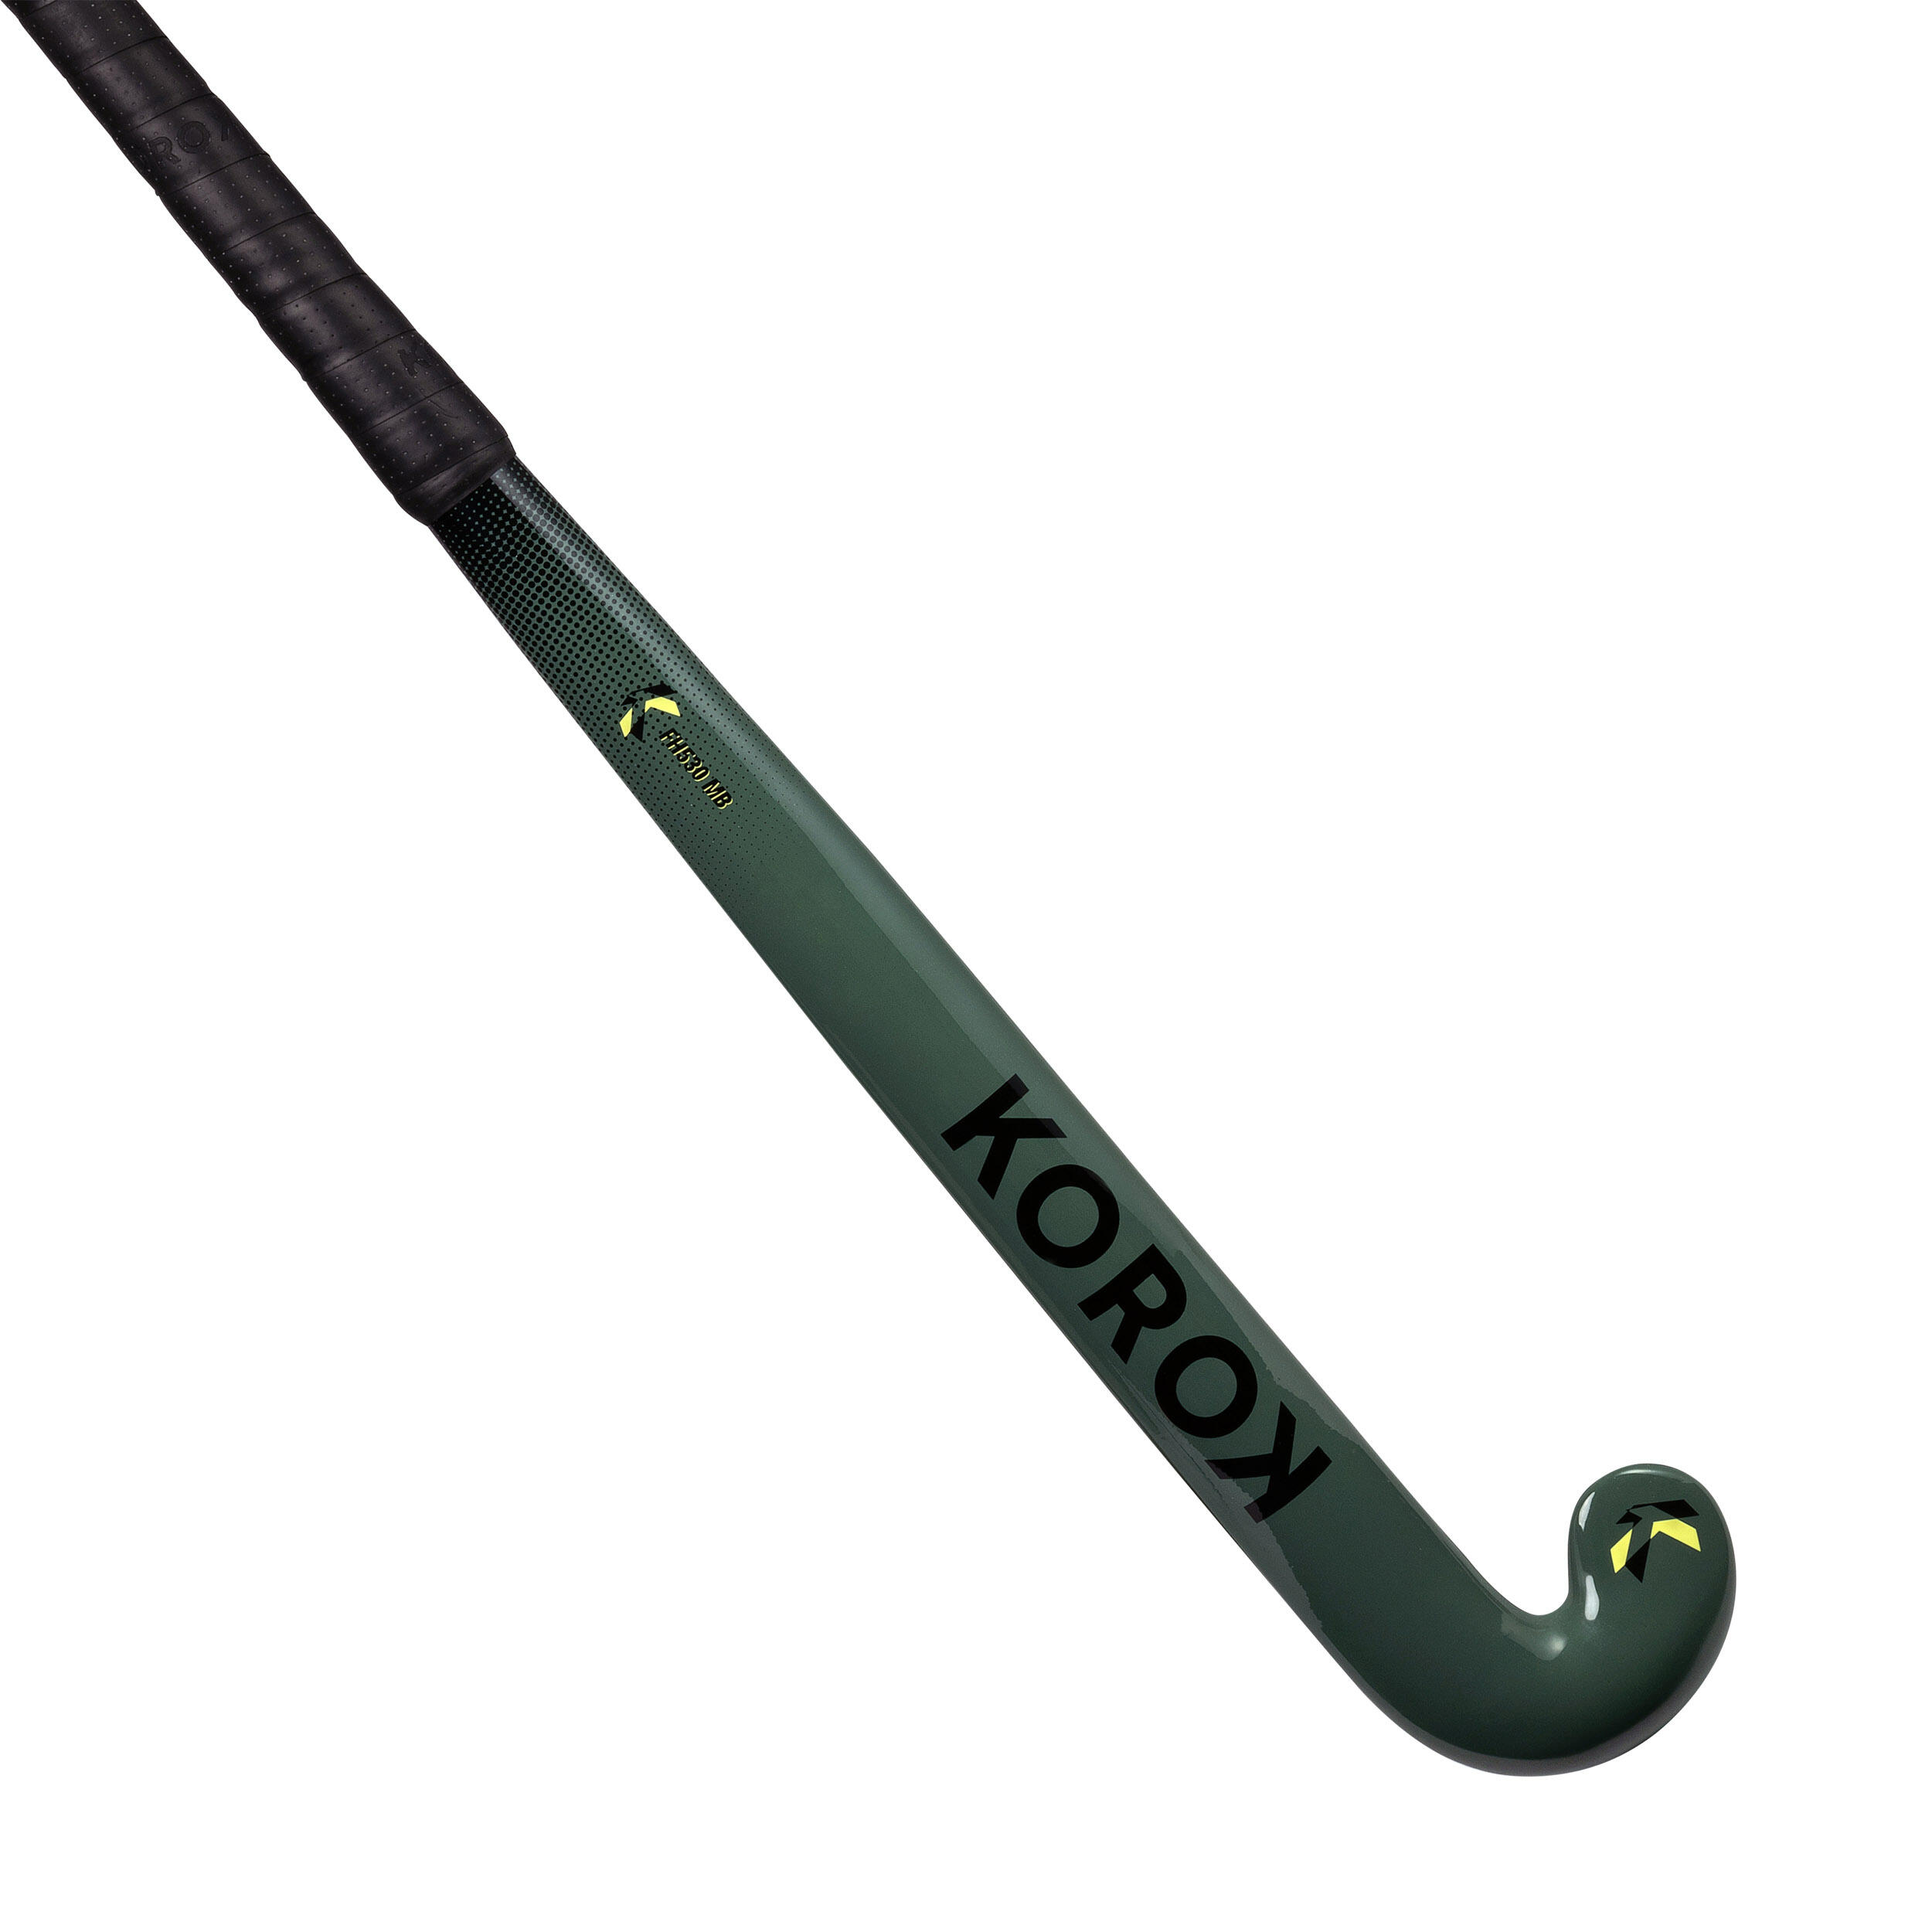 KOROK Adult Intermediate 30% Carbon Mid Bow Field Hockey Stick FH530 - Khaki/Black